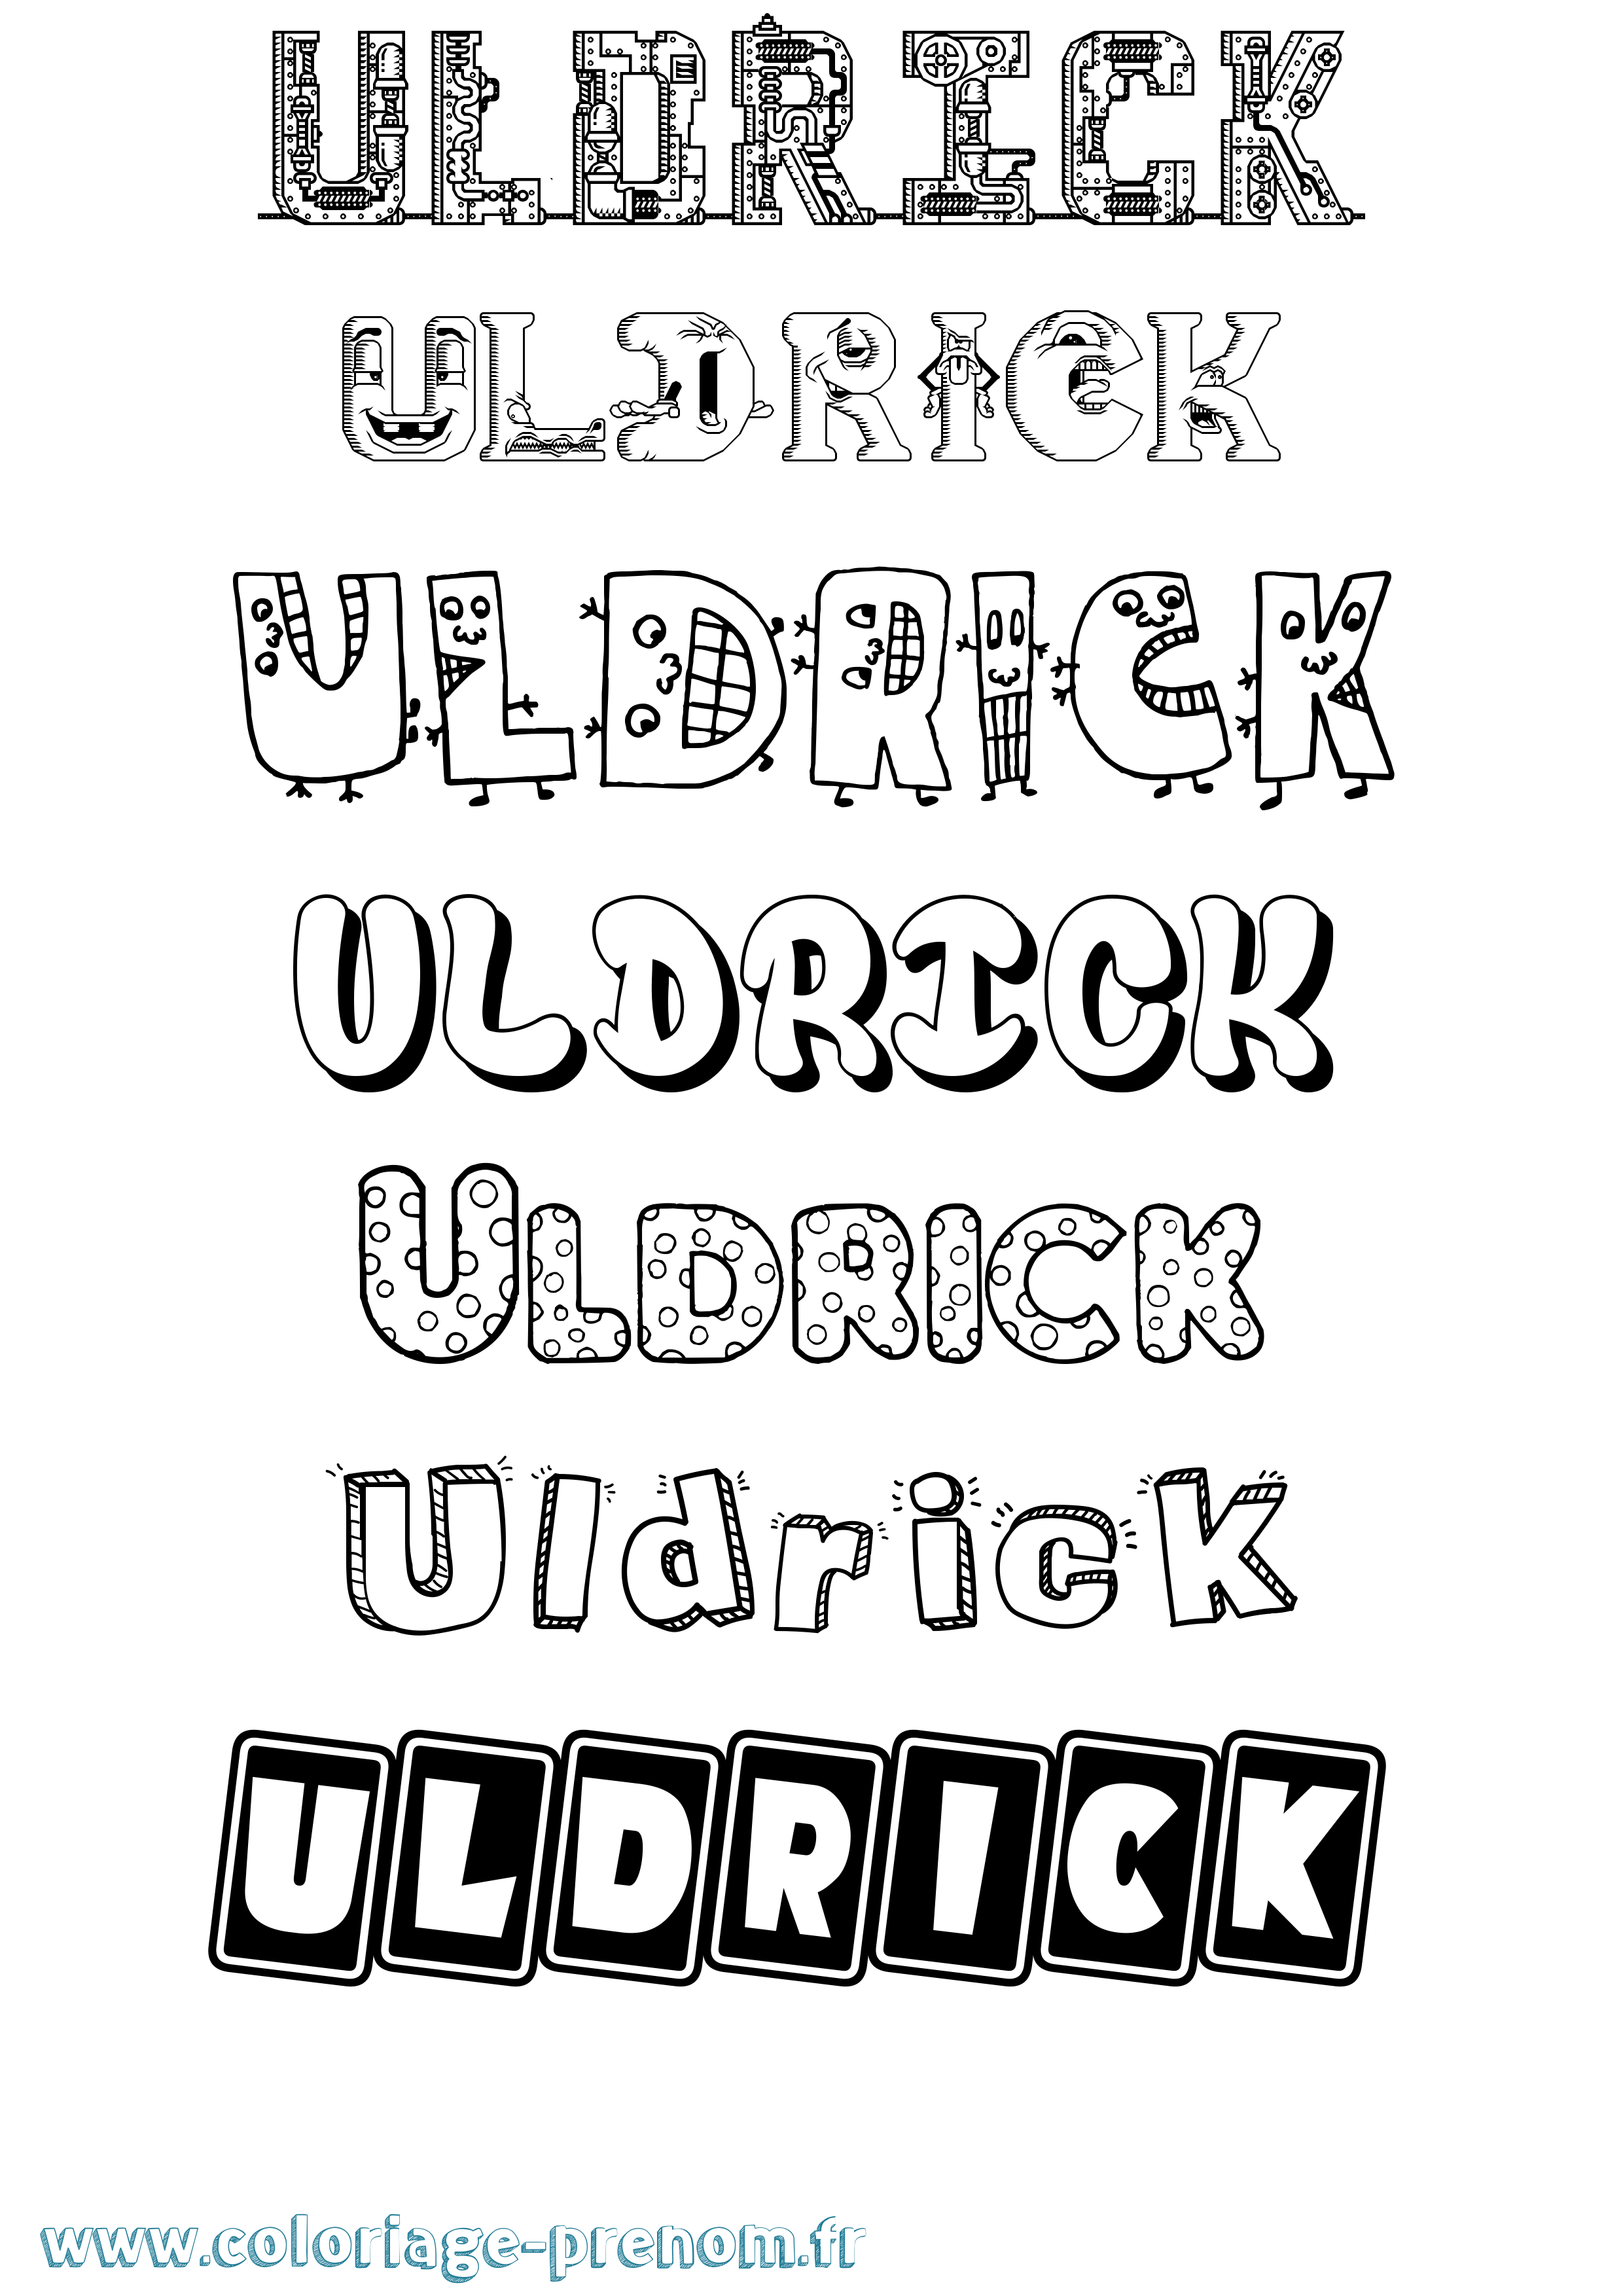 Coloriage prénom Uldrick Fun